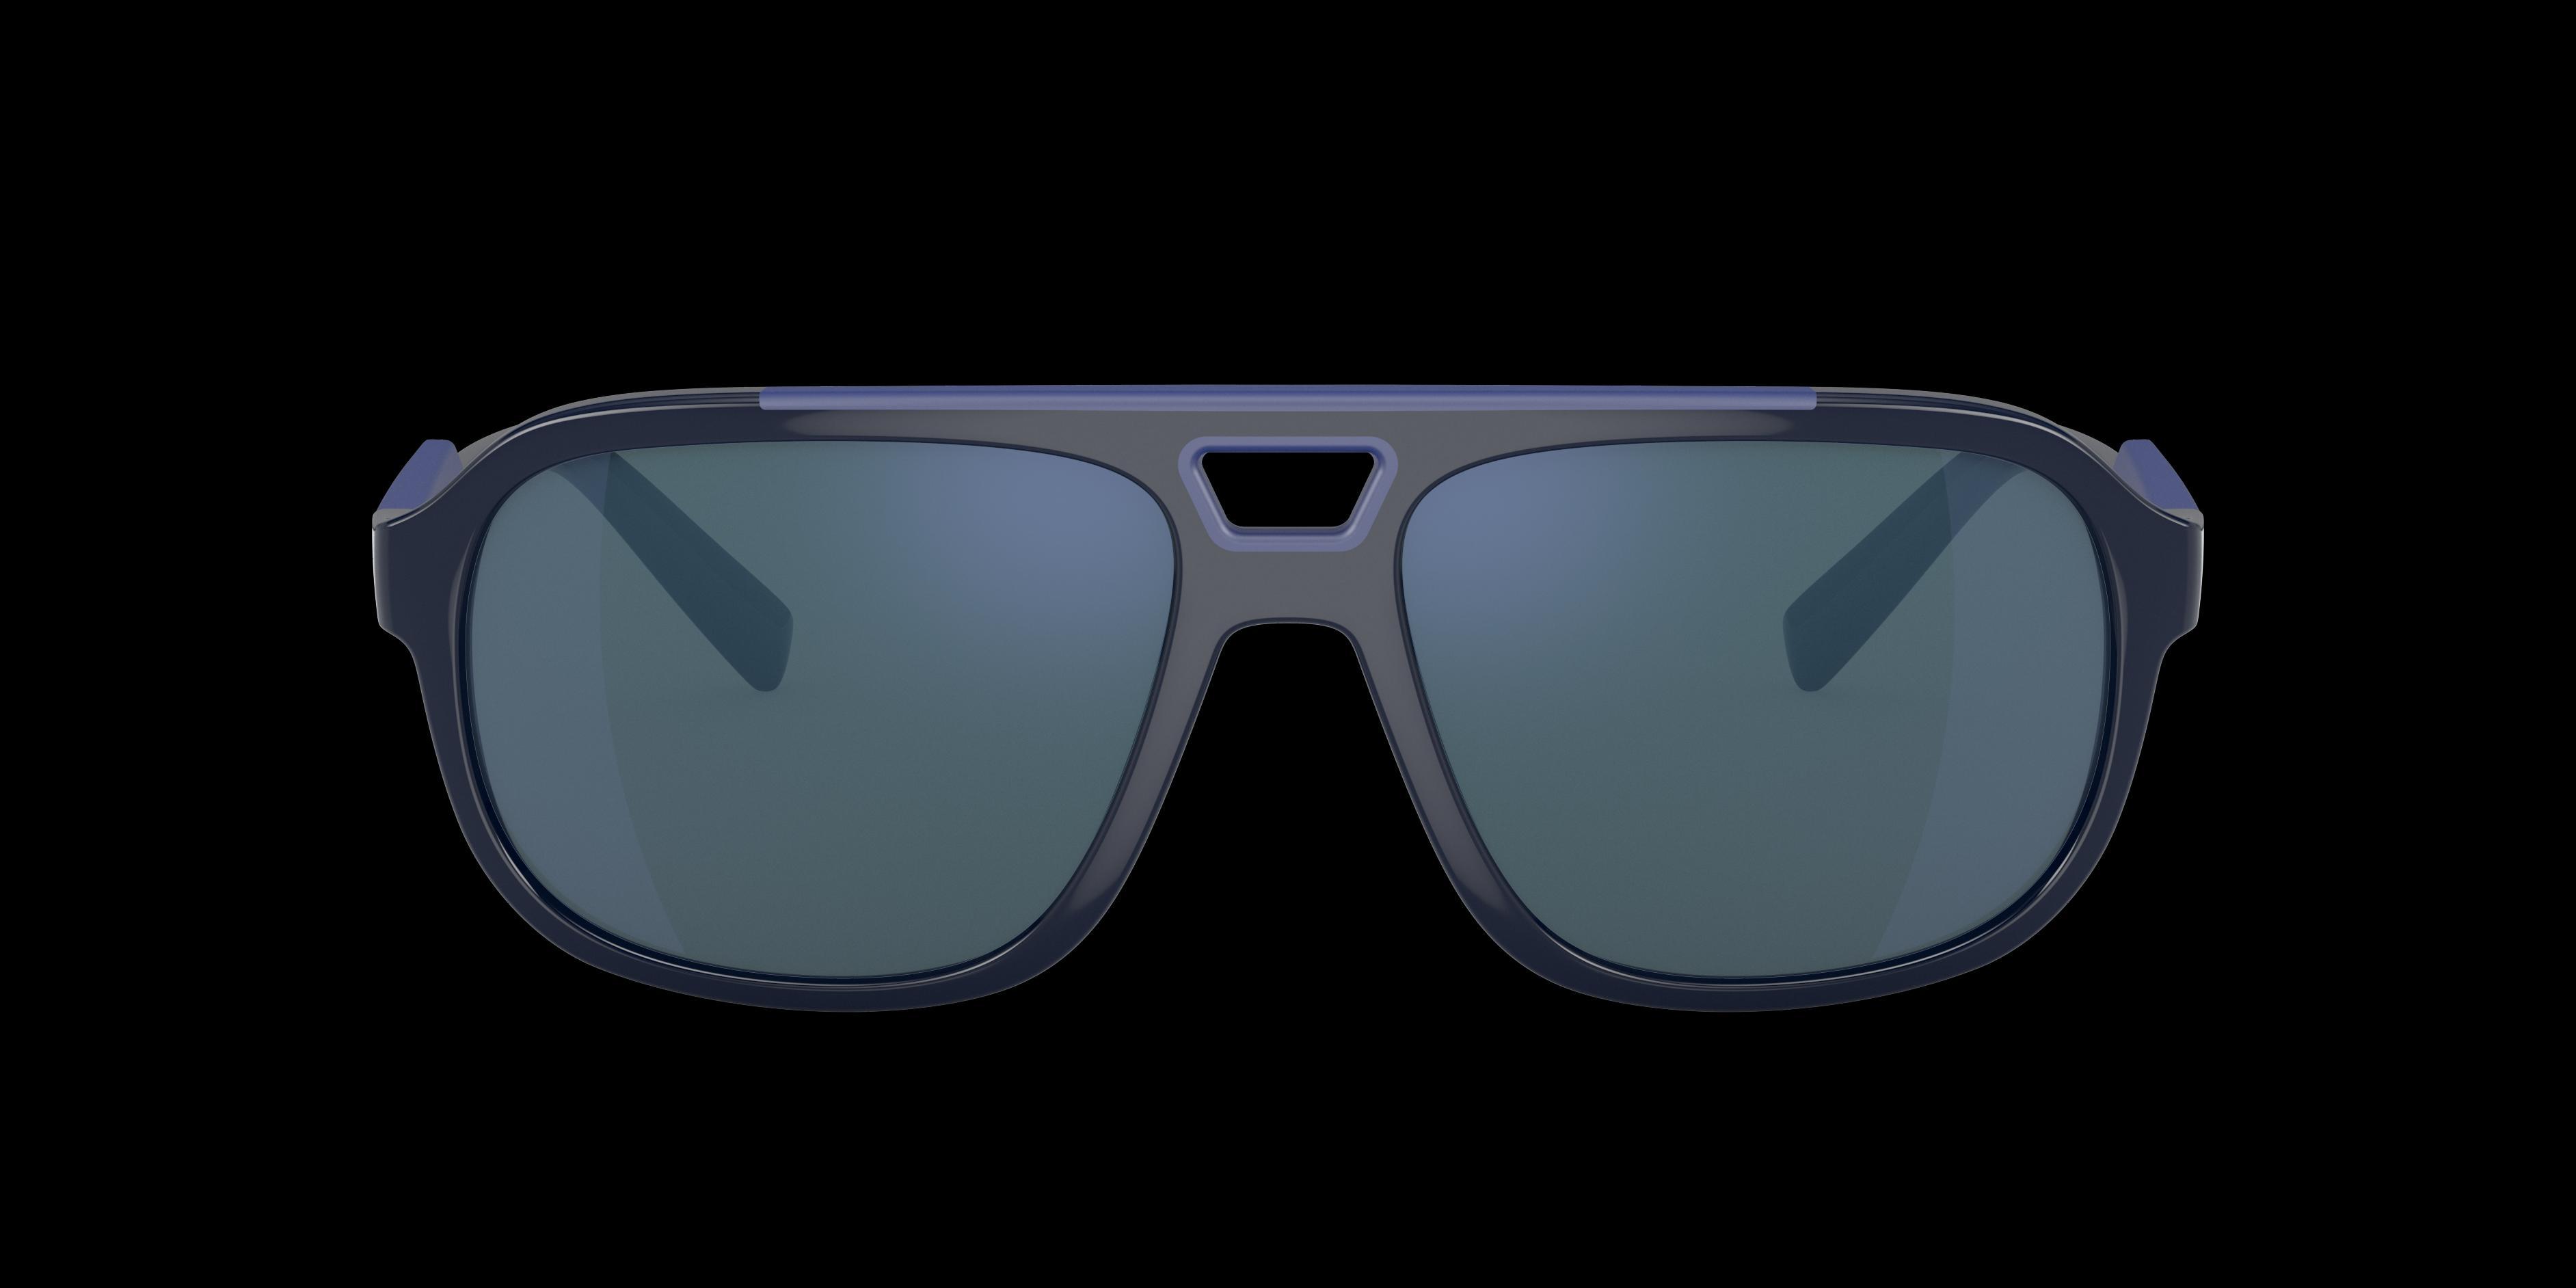 Ray-Ban x Scuderia Ferrari 57mm Polarized Irregular Sunglasses Product Image